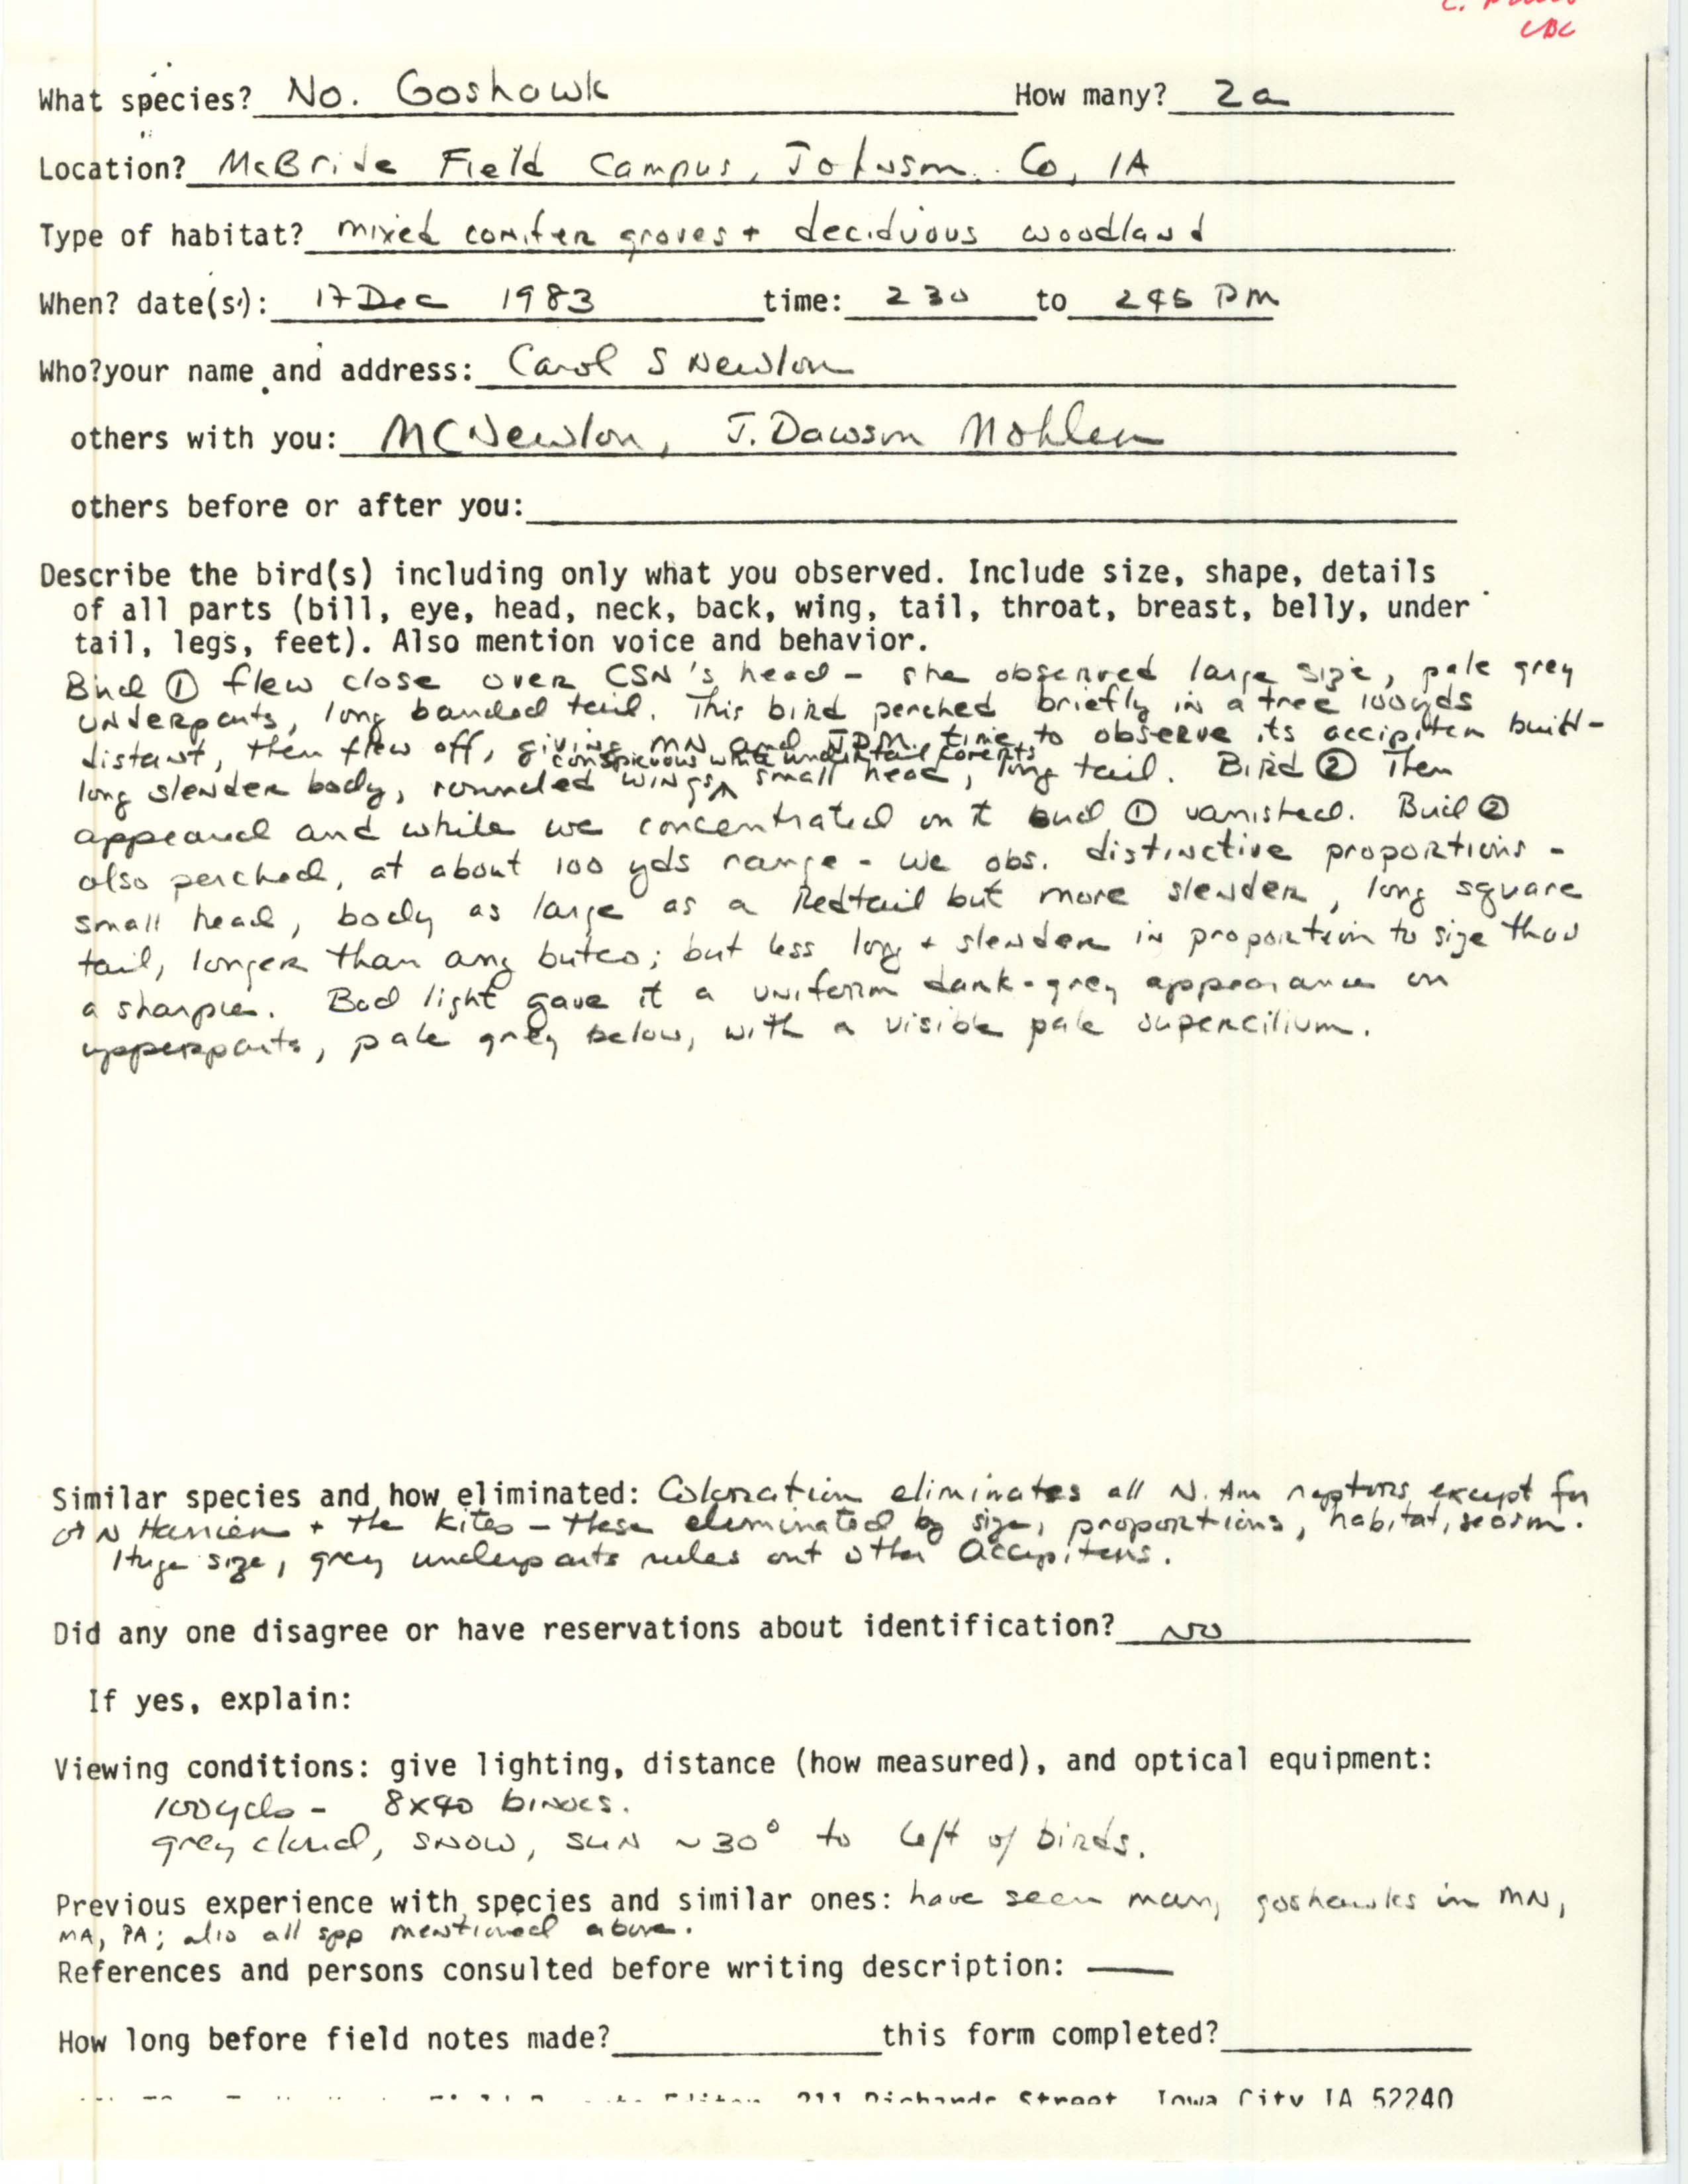 Rare bird documentation form for Northern Goshawk at MacBride Field Campus, 1983